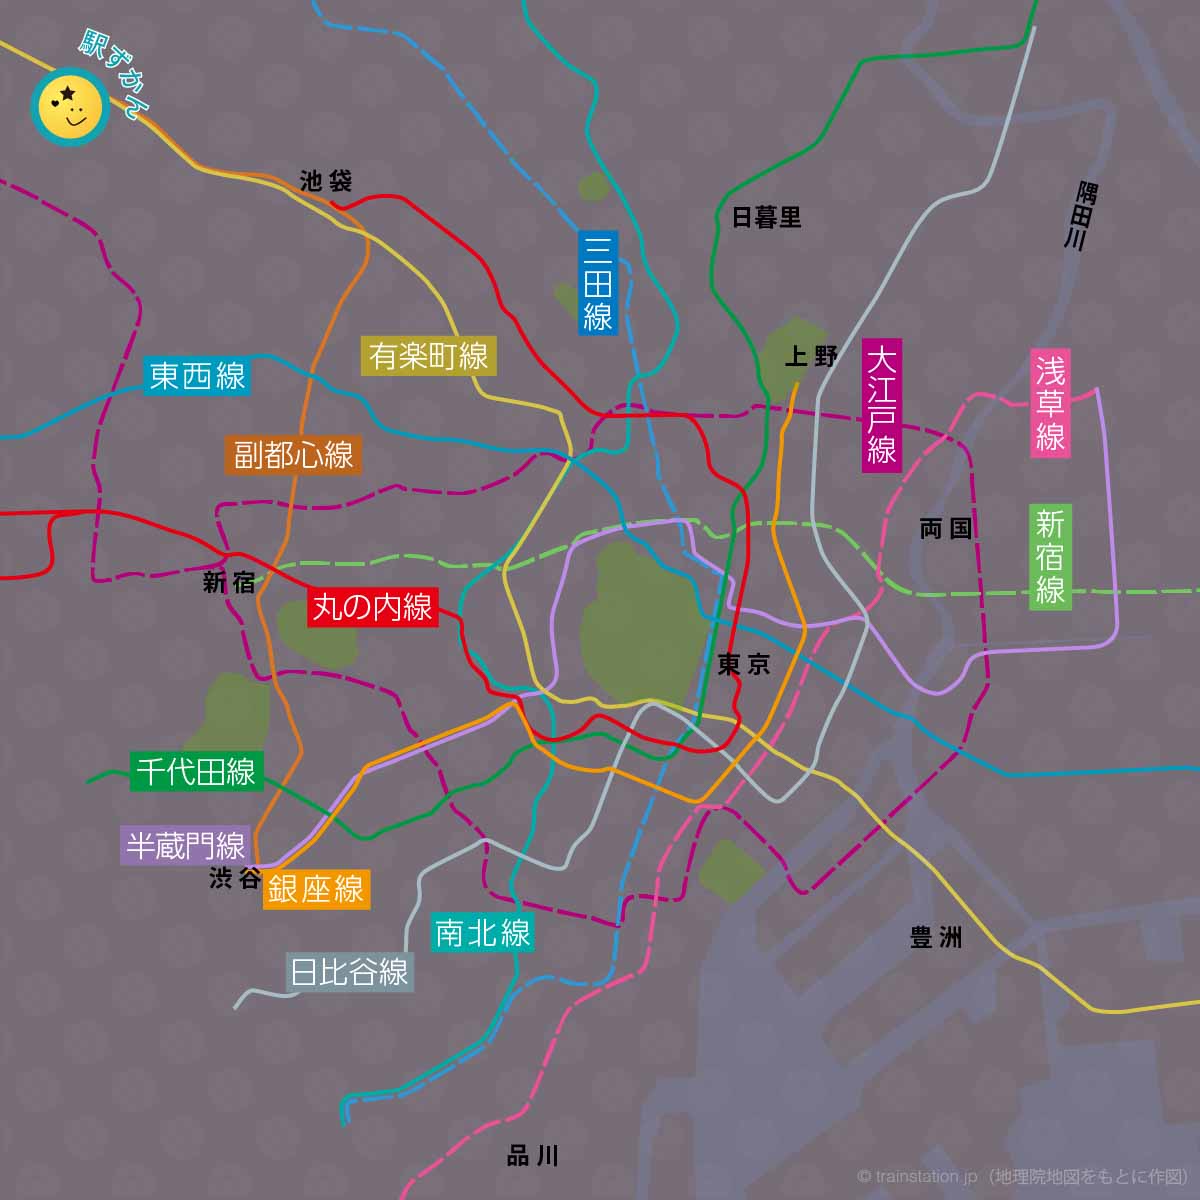 東京の地下鉄路線図